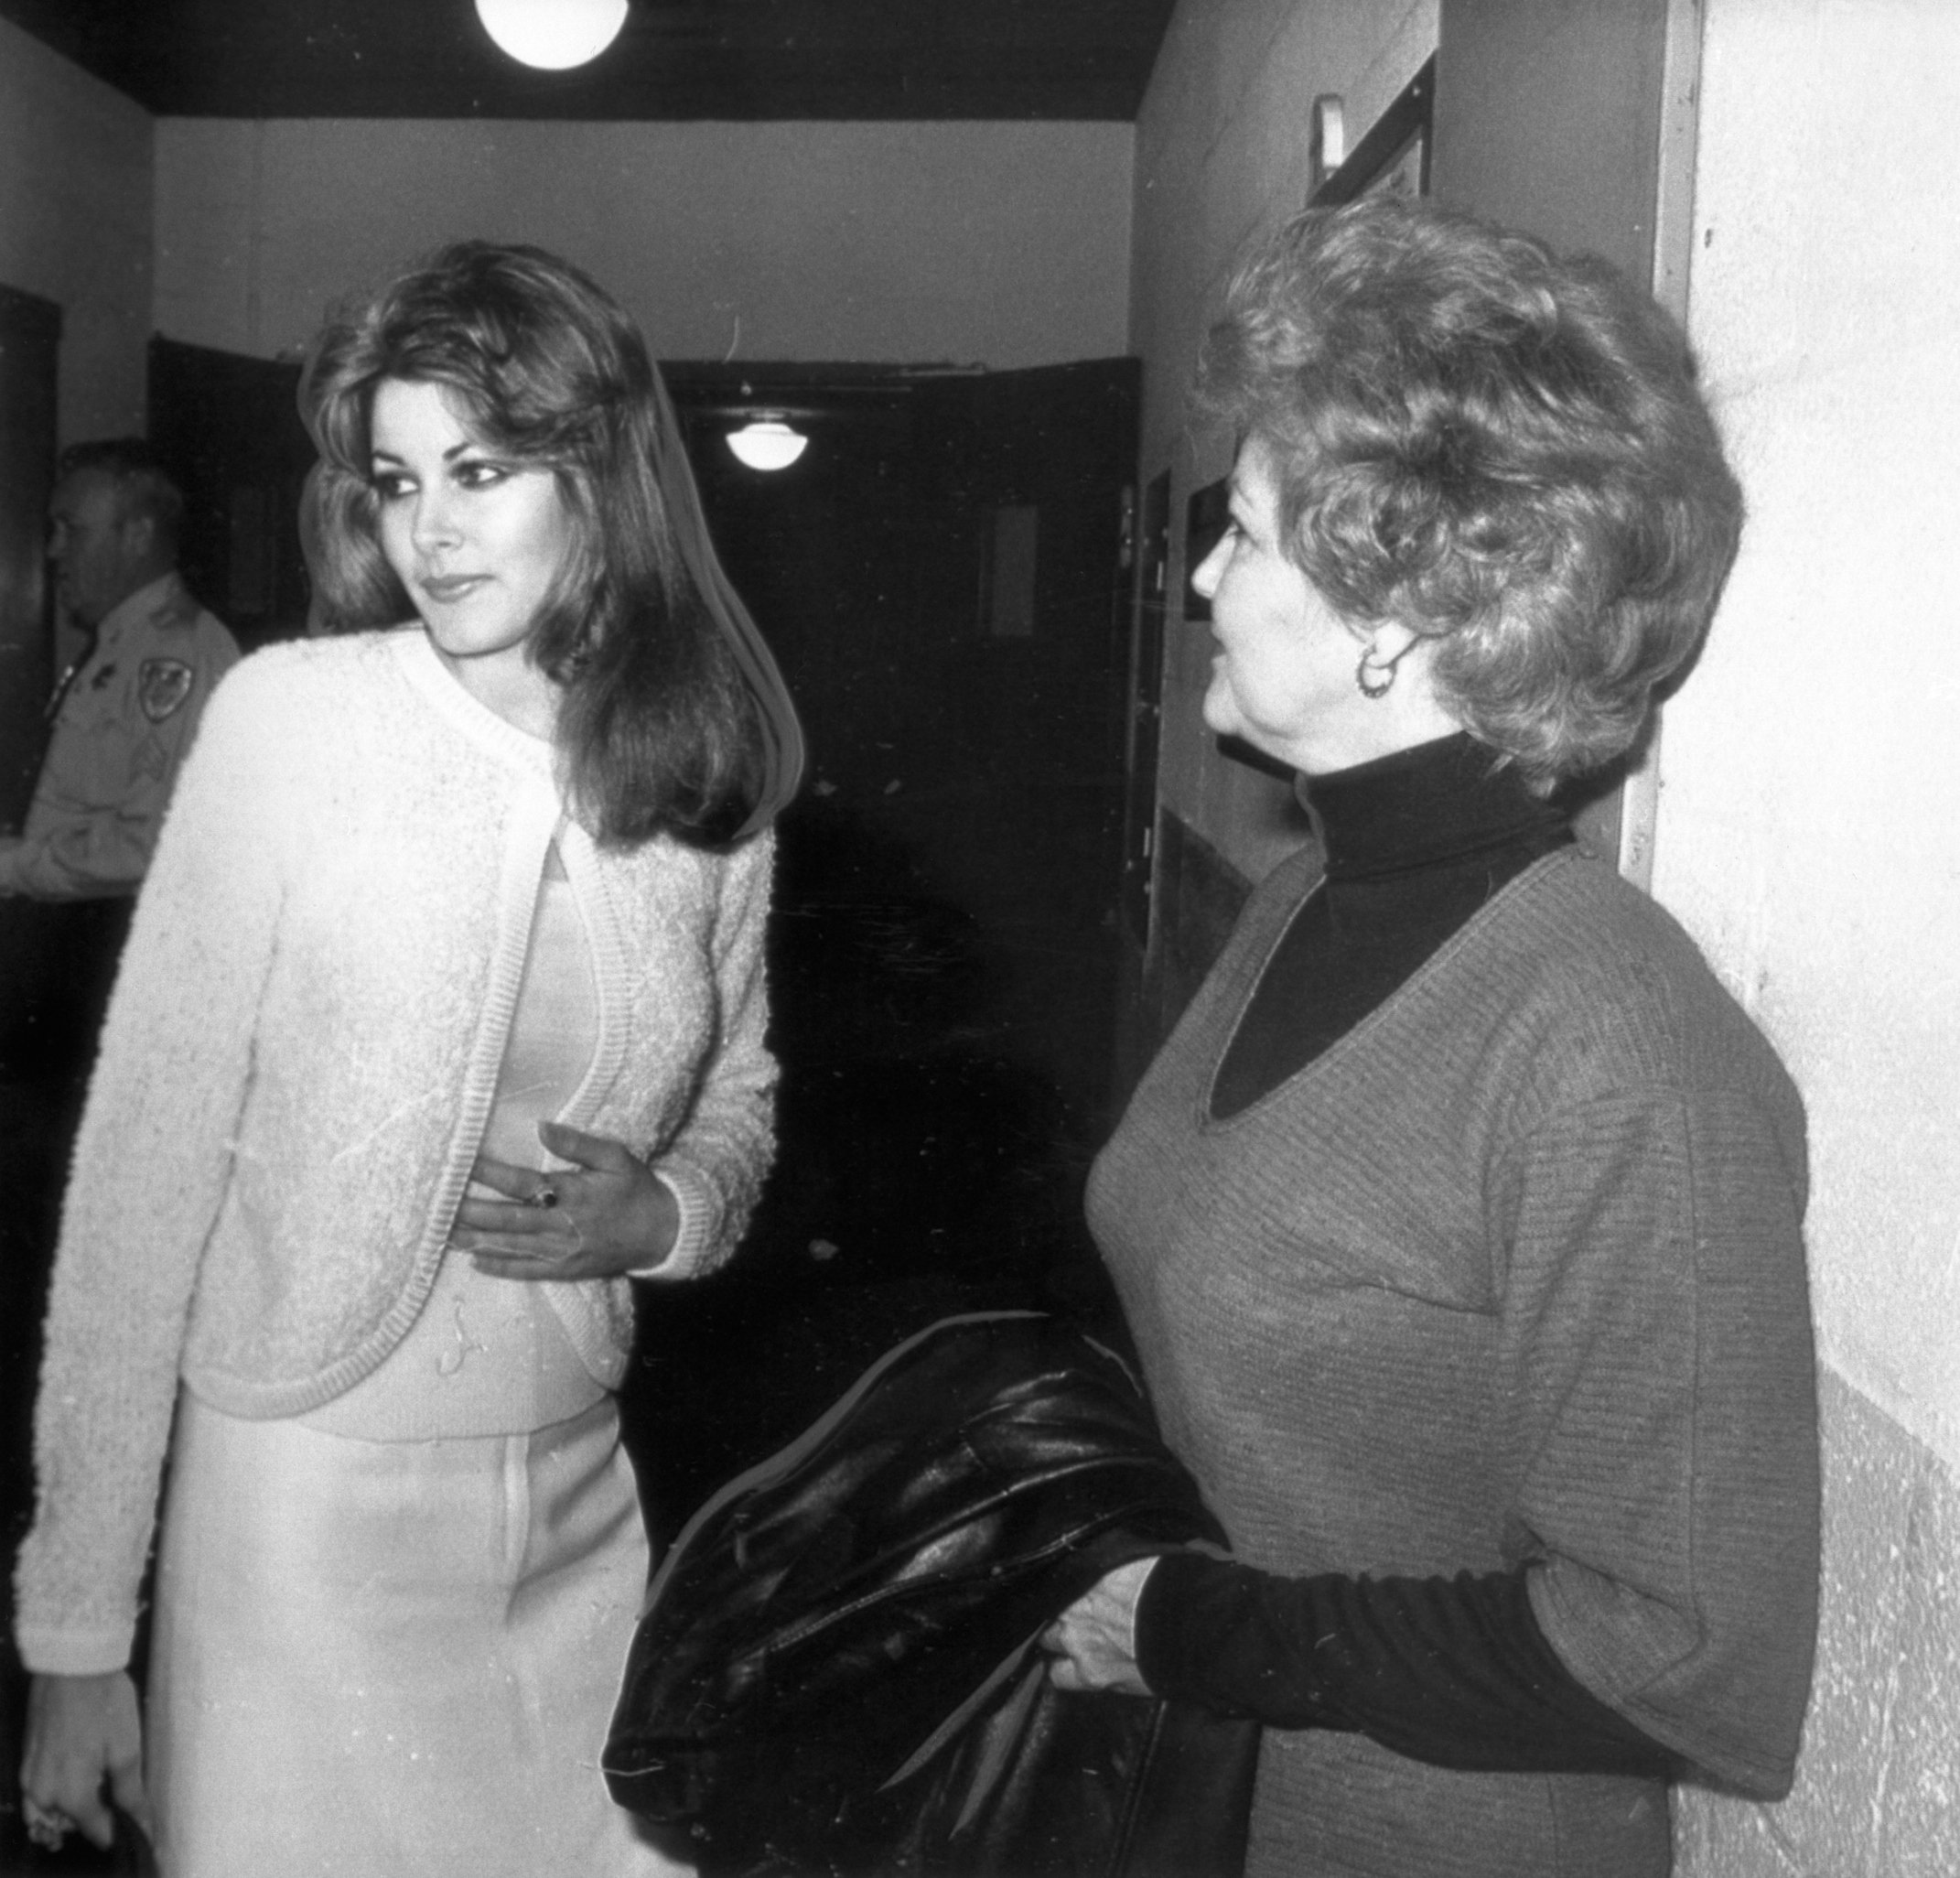 Ginger Alden (L), Elvis Presley's former girlfriend, is shown with her mother, Jo Alden